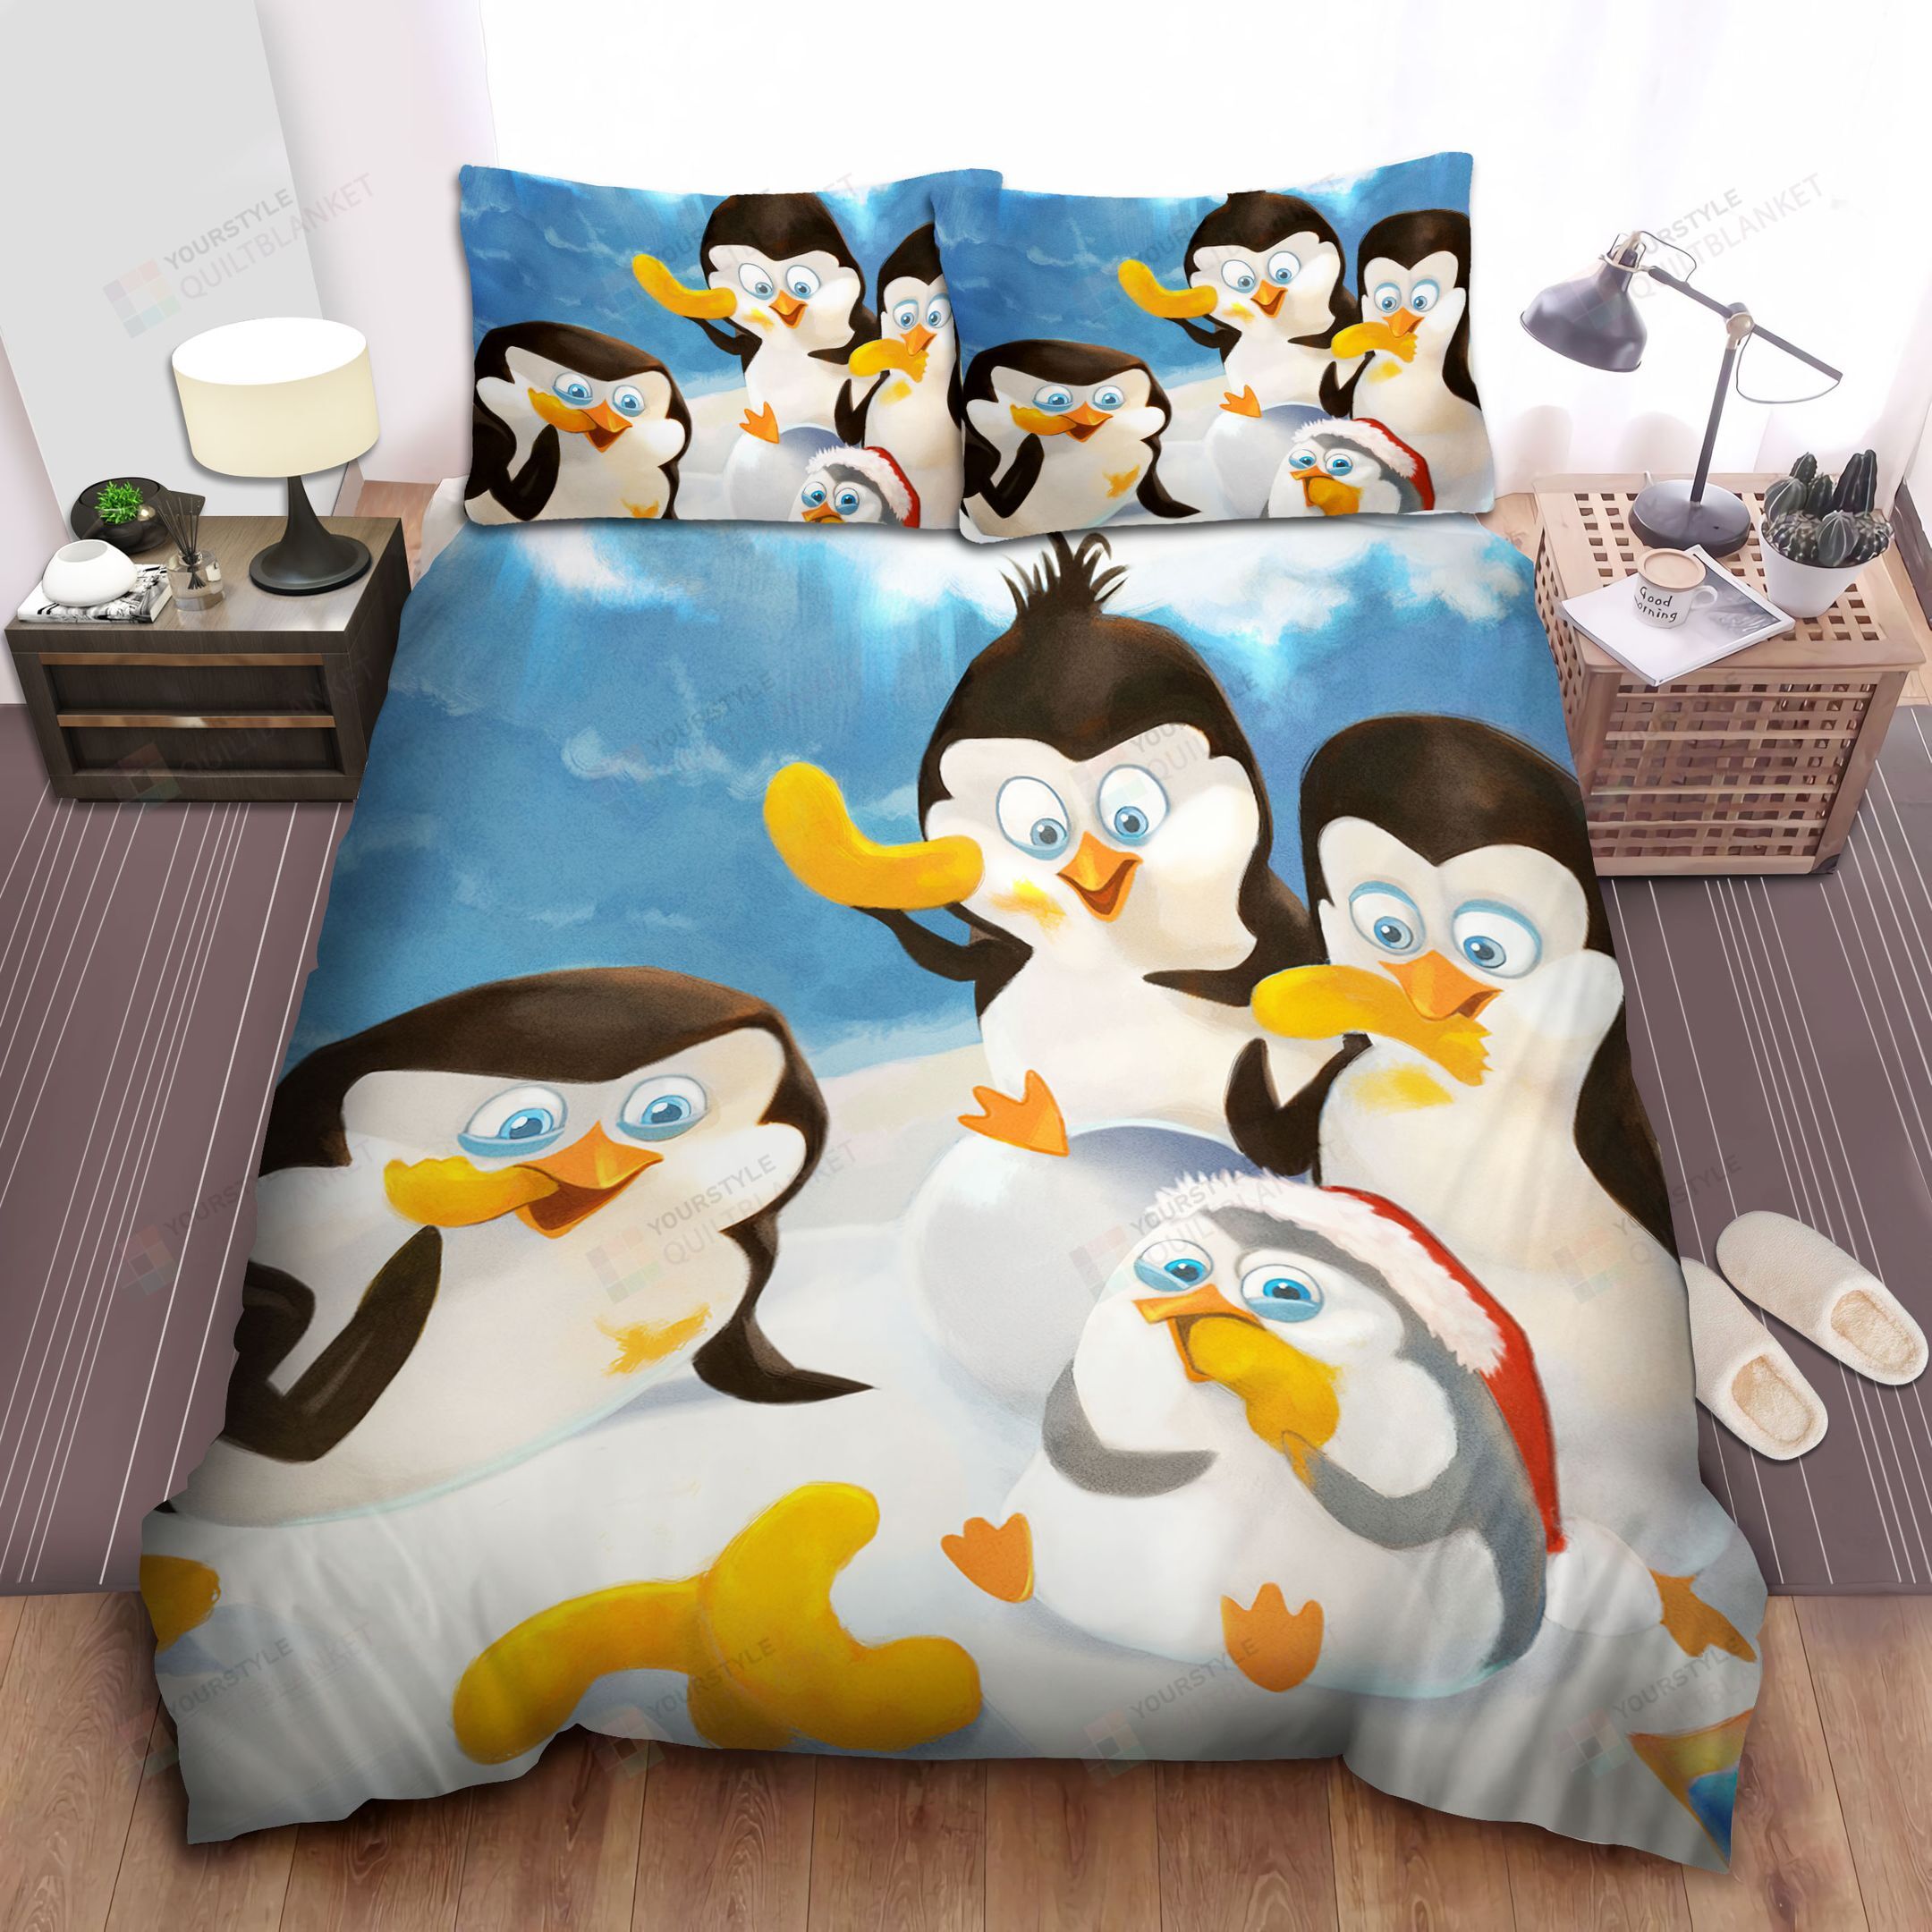 Madagascar Baby Penguins Eating Cheezy Dibbles Artwork Bed Sheets Spread Comforter Duvet Cover Bedding Sets